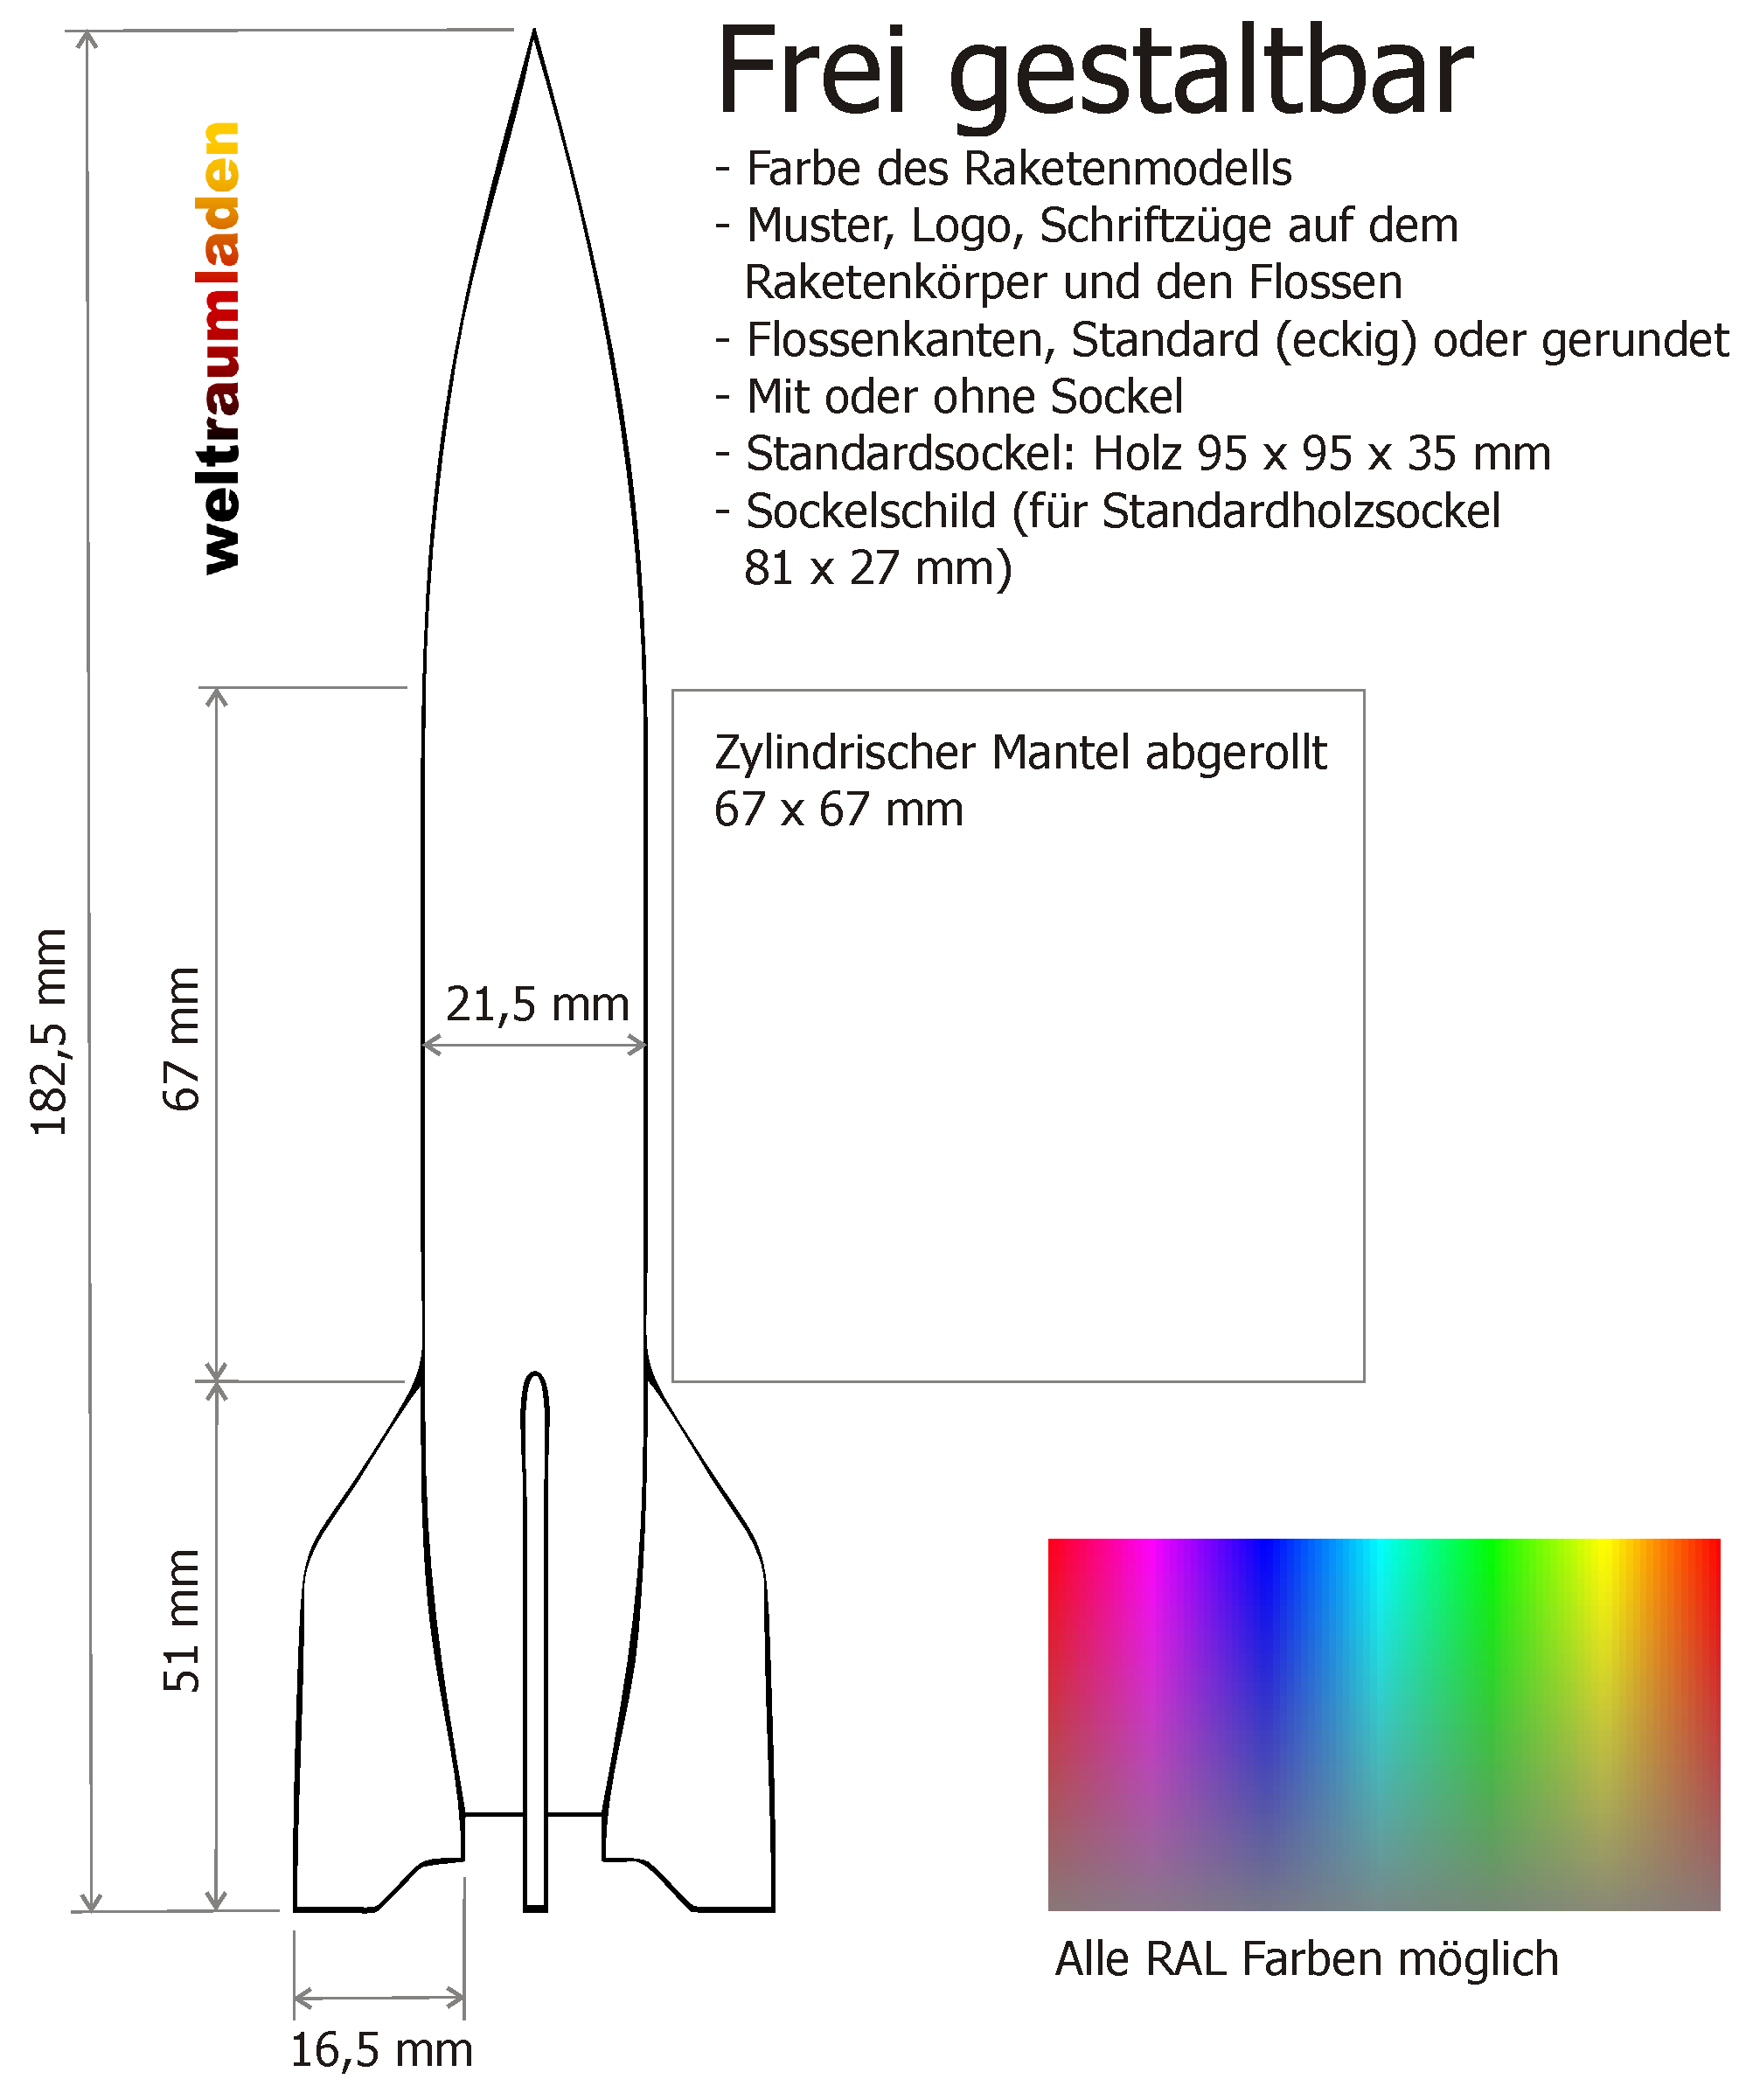 Weltraumladen > Rakete individuell - Frei gestaltbare Raketenmodelle